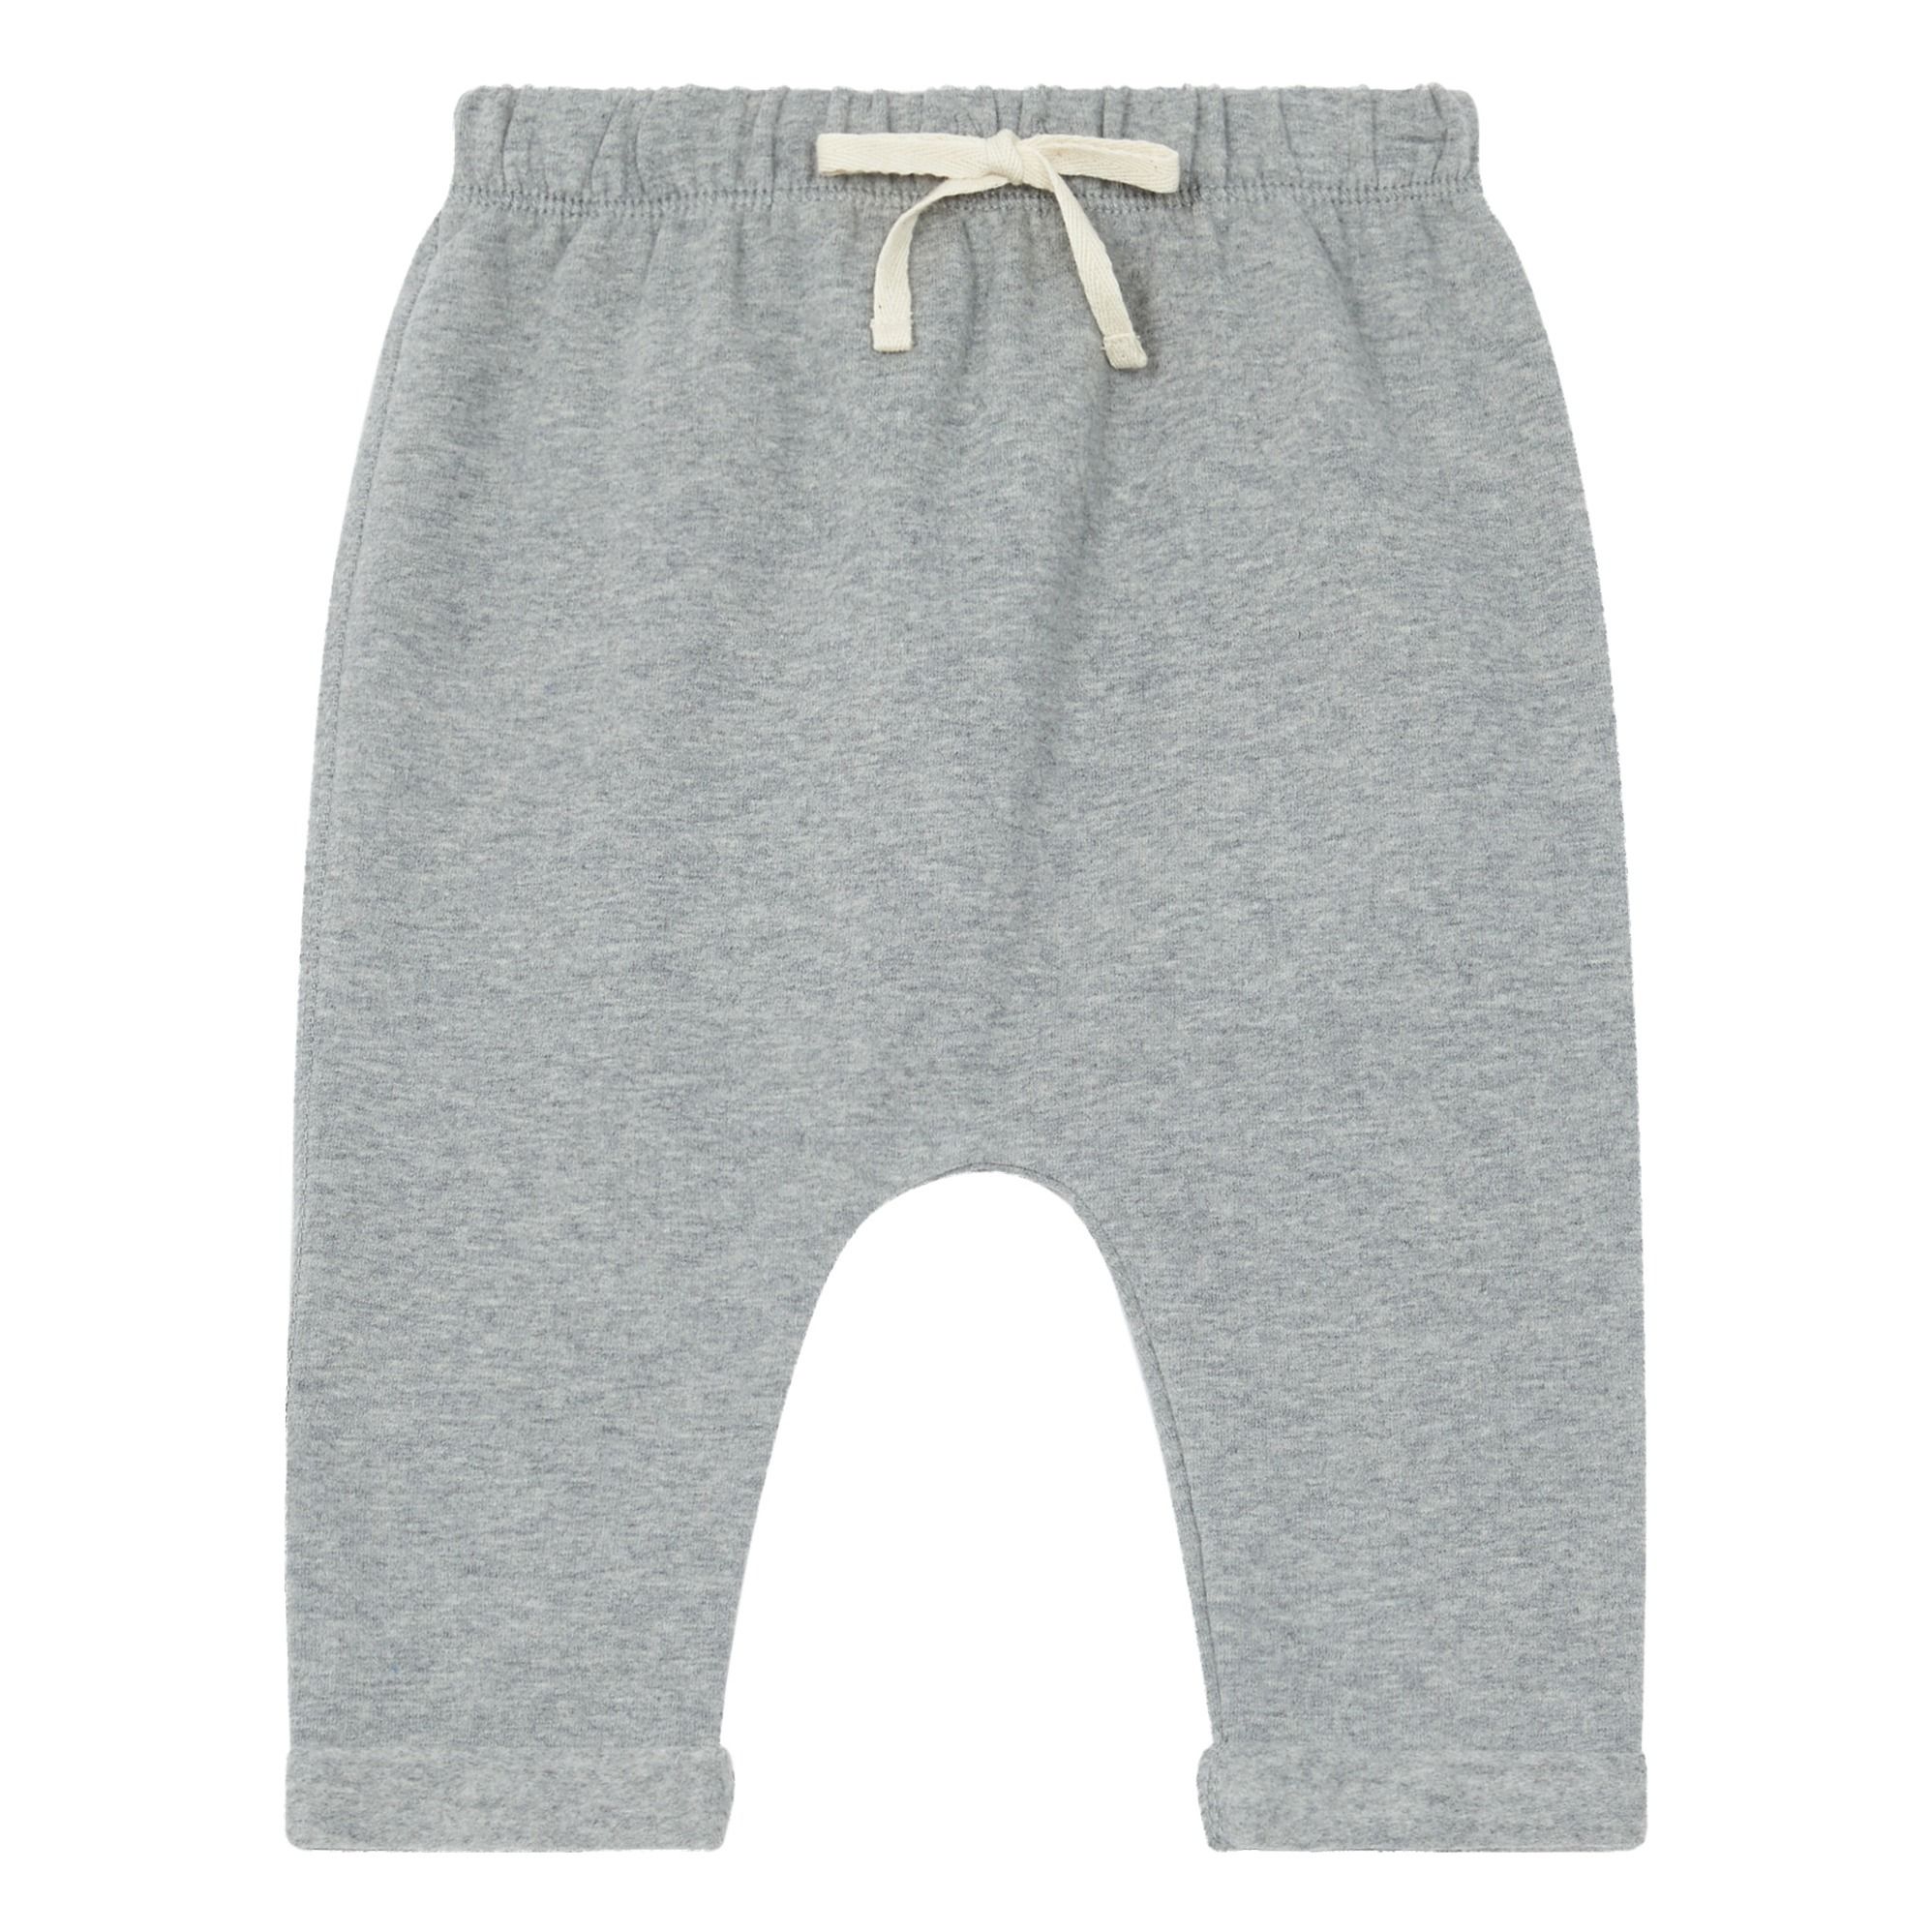 Gray Label - Pantalon Sarouel Coton Bio - Fille - Gris